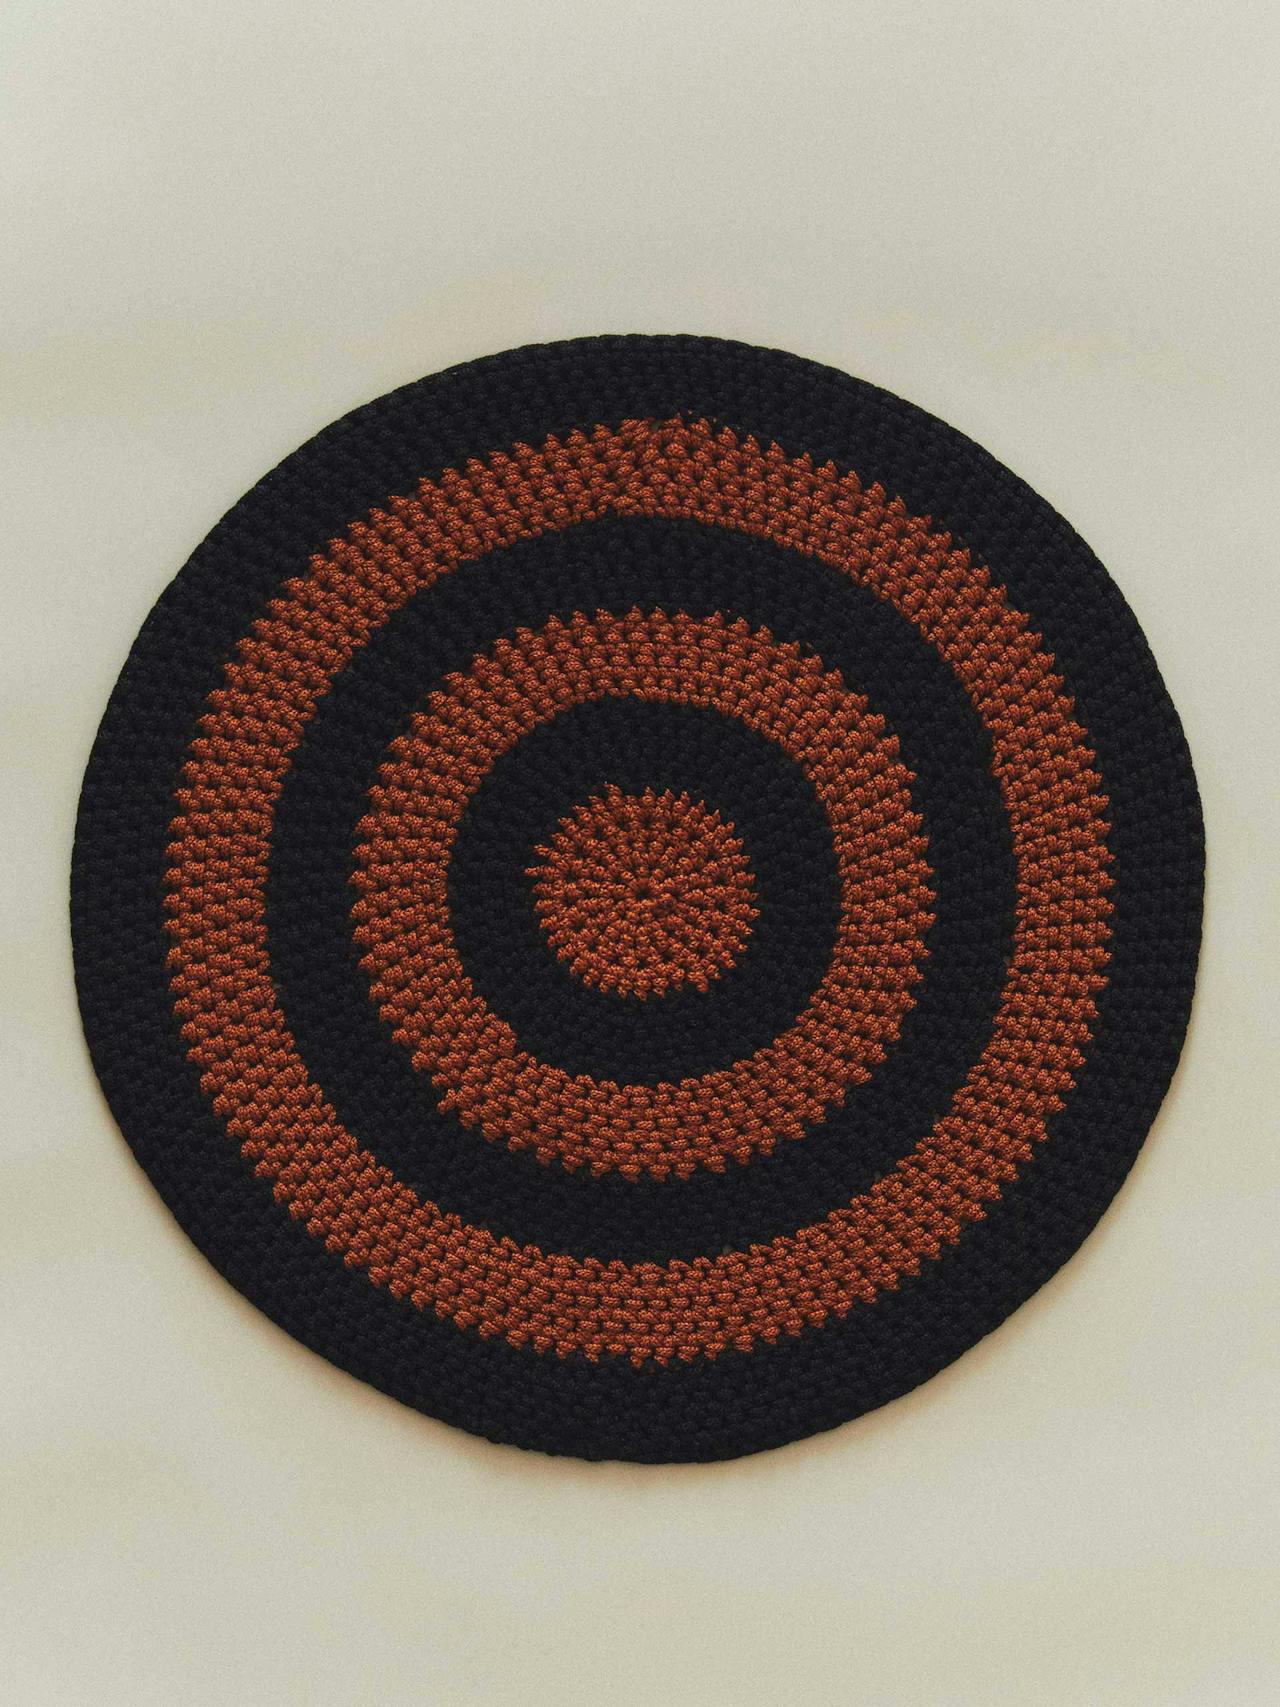 Woven circle design placemat